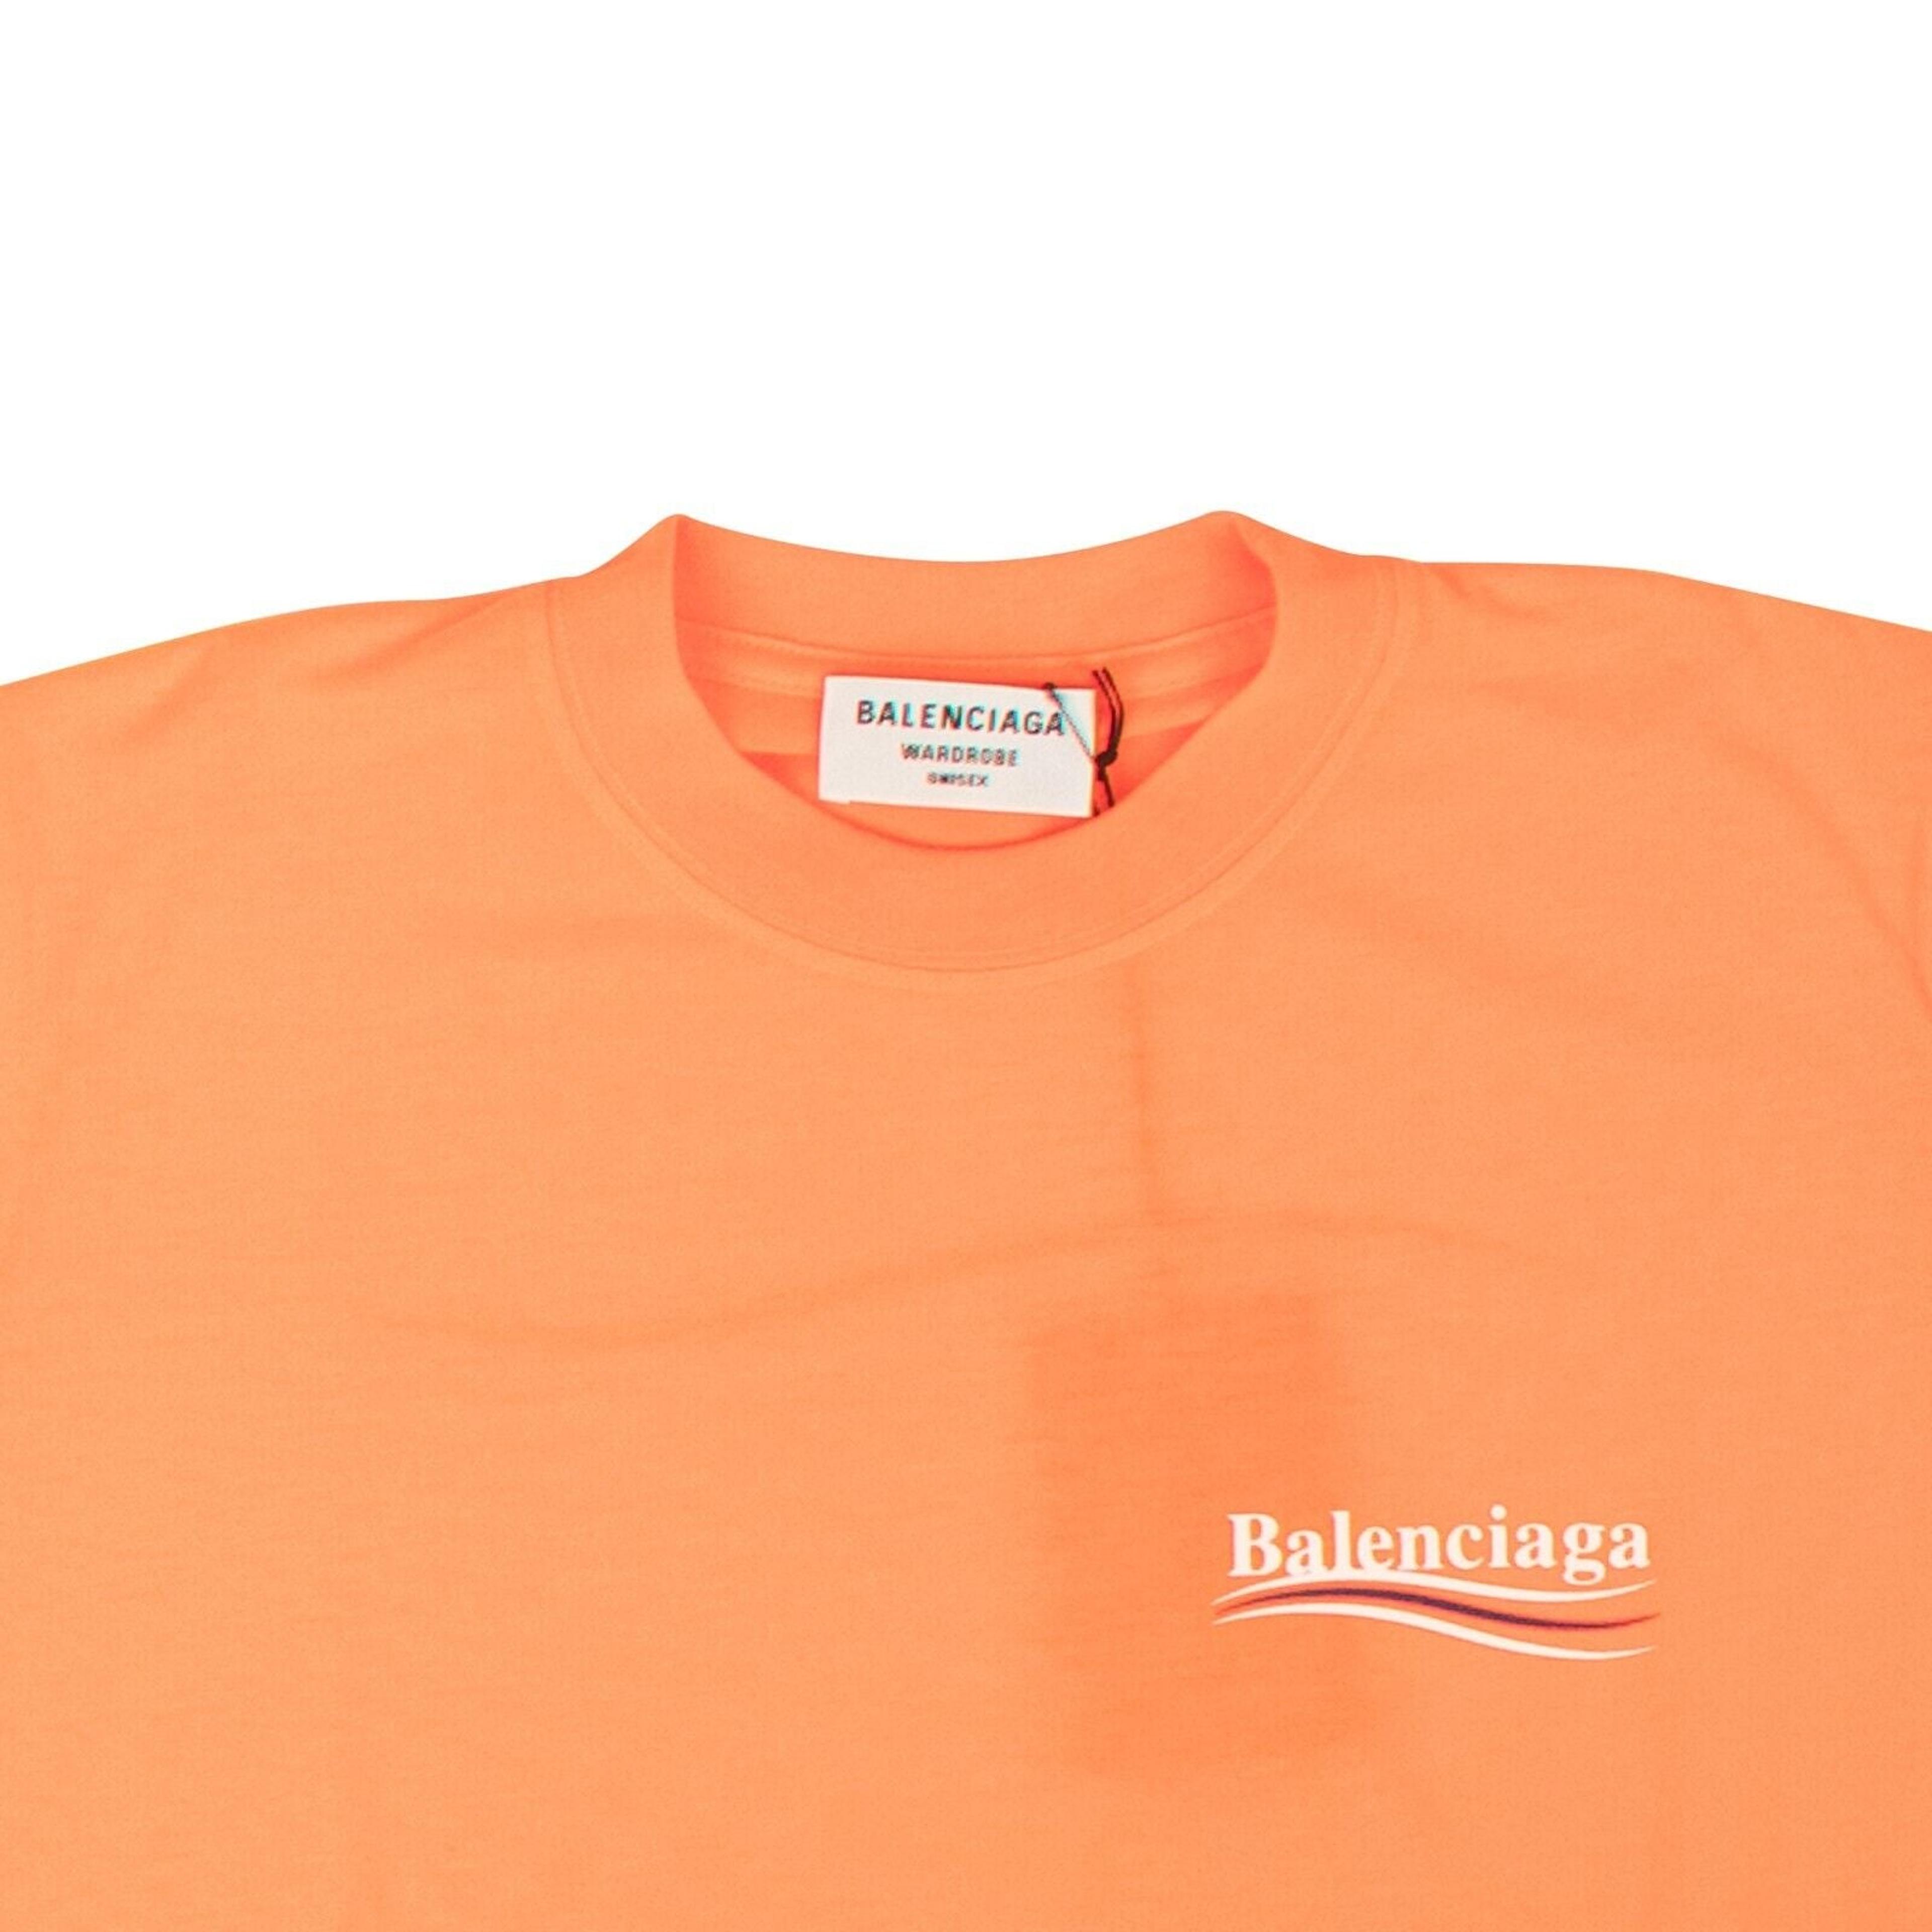 Alternate View 2 of Balenciaga Political Campaign T-Shirt - Orange